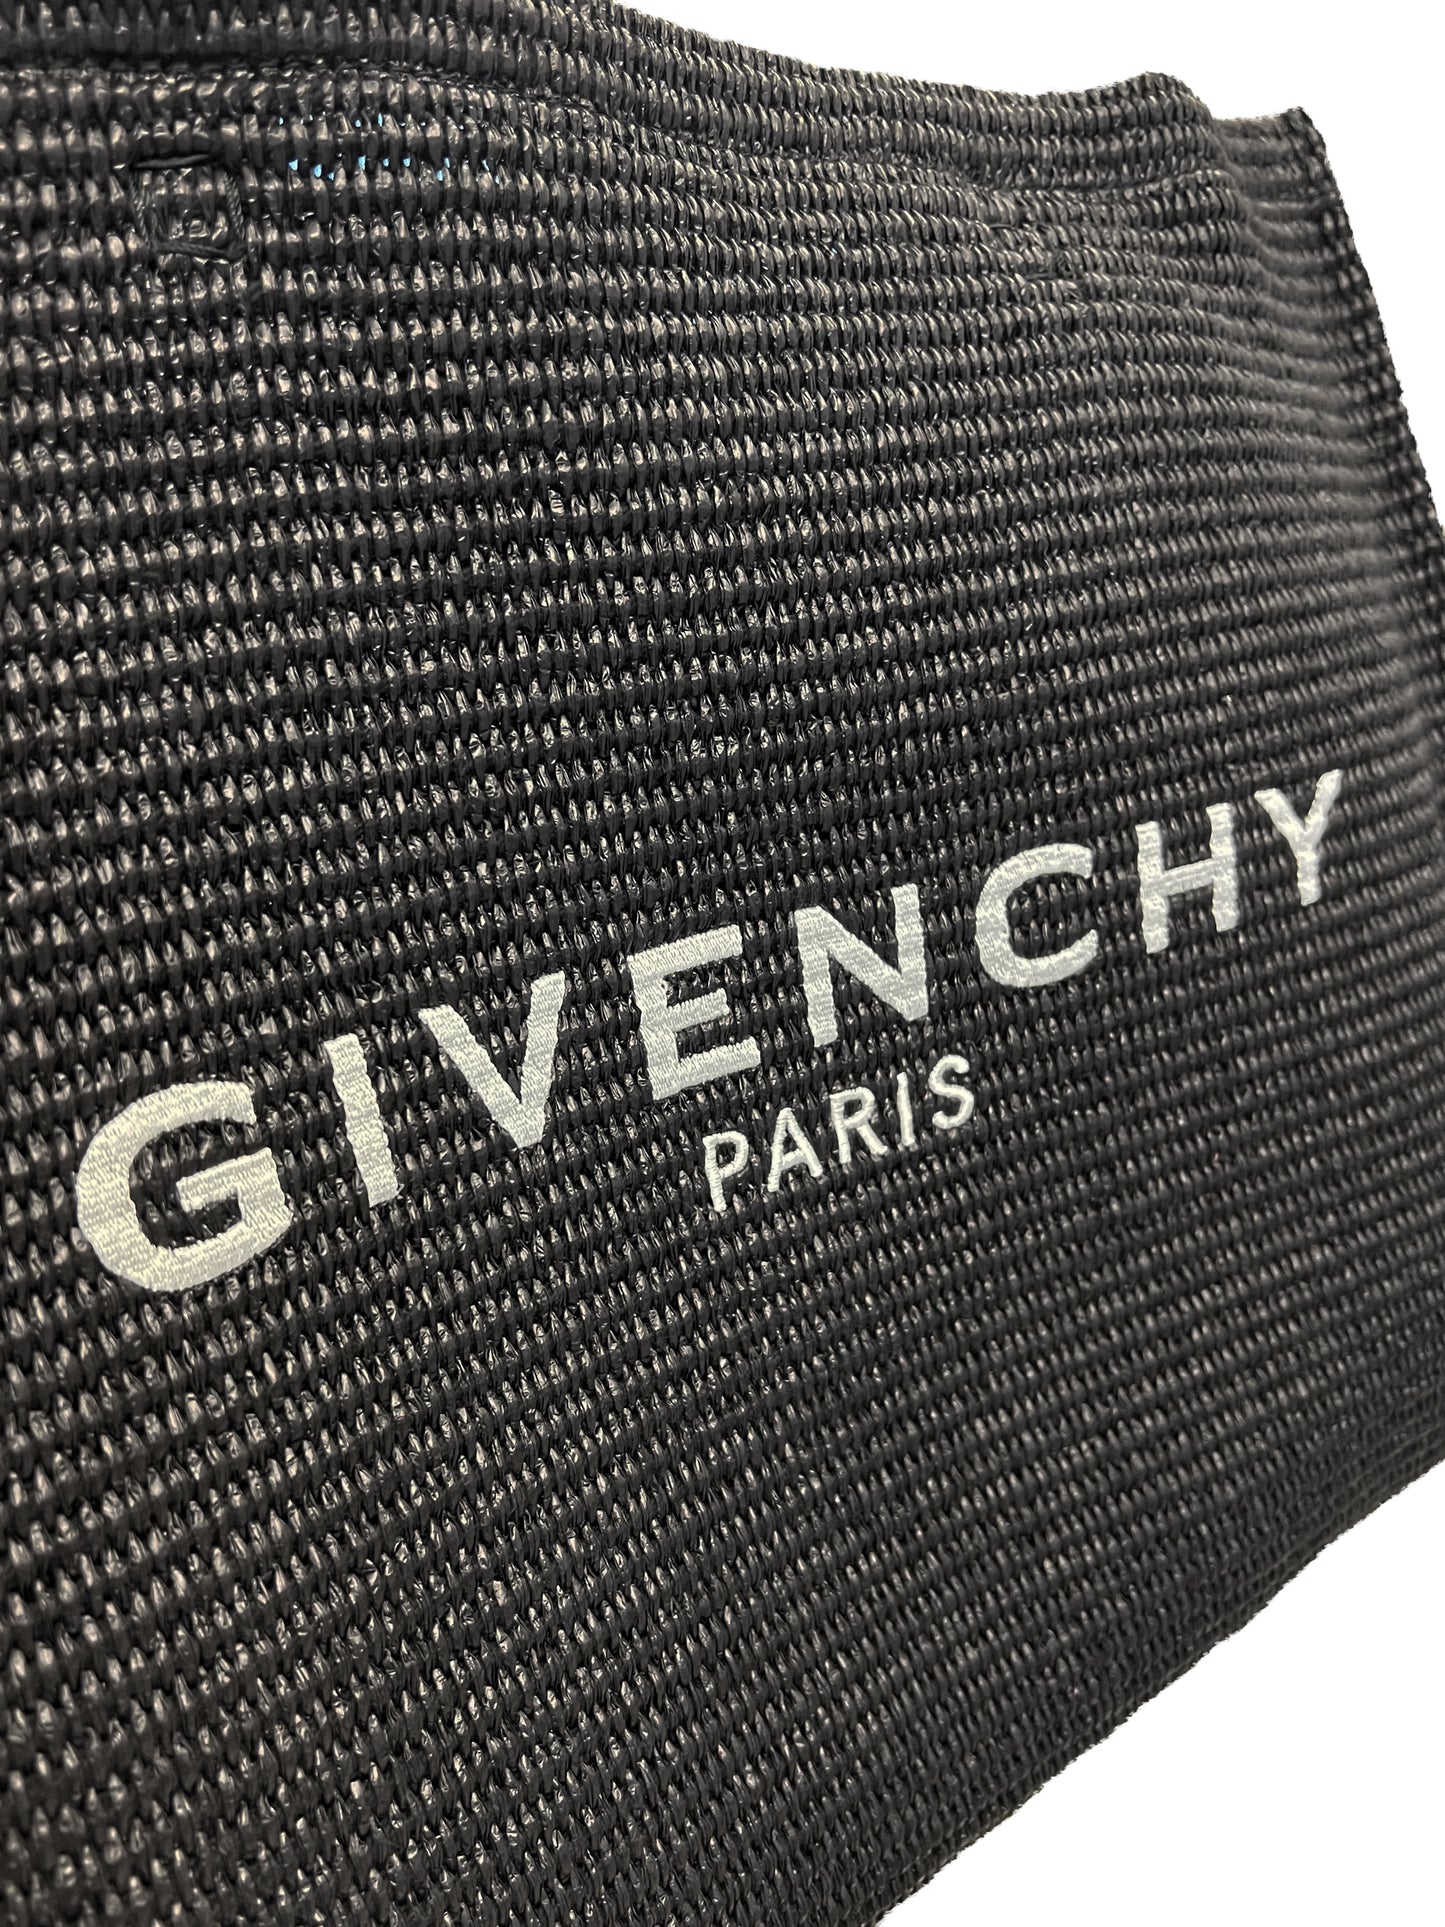 Givenchy Tasche Large G-Tote Schwarz